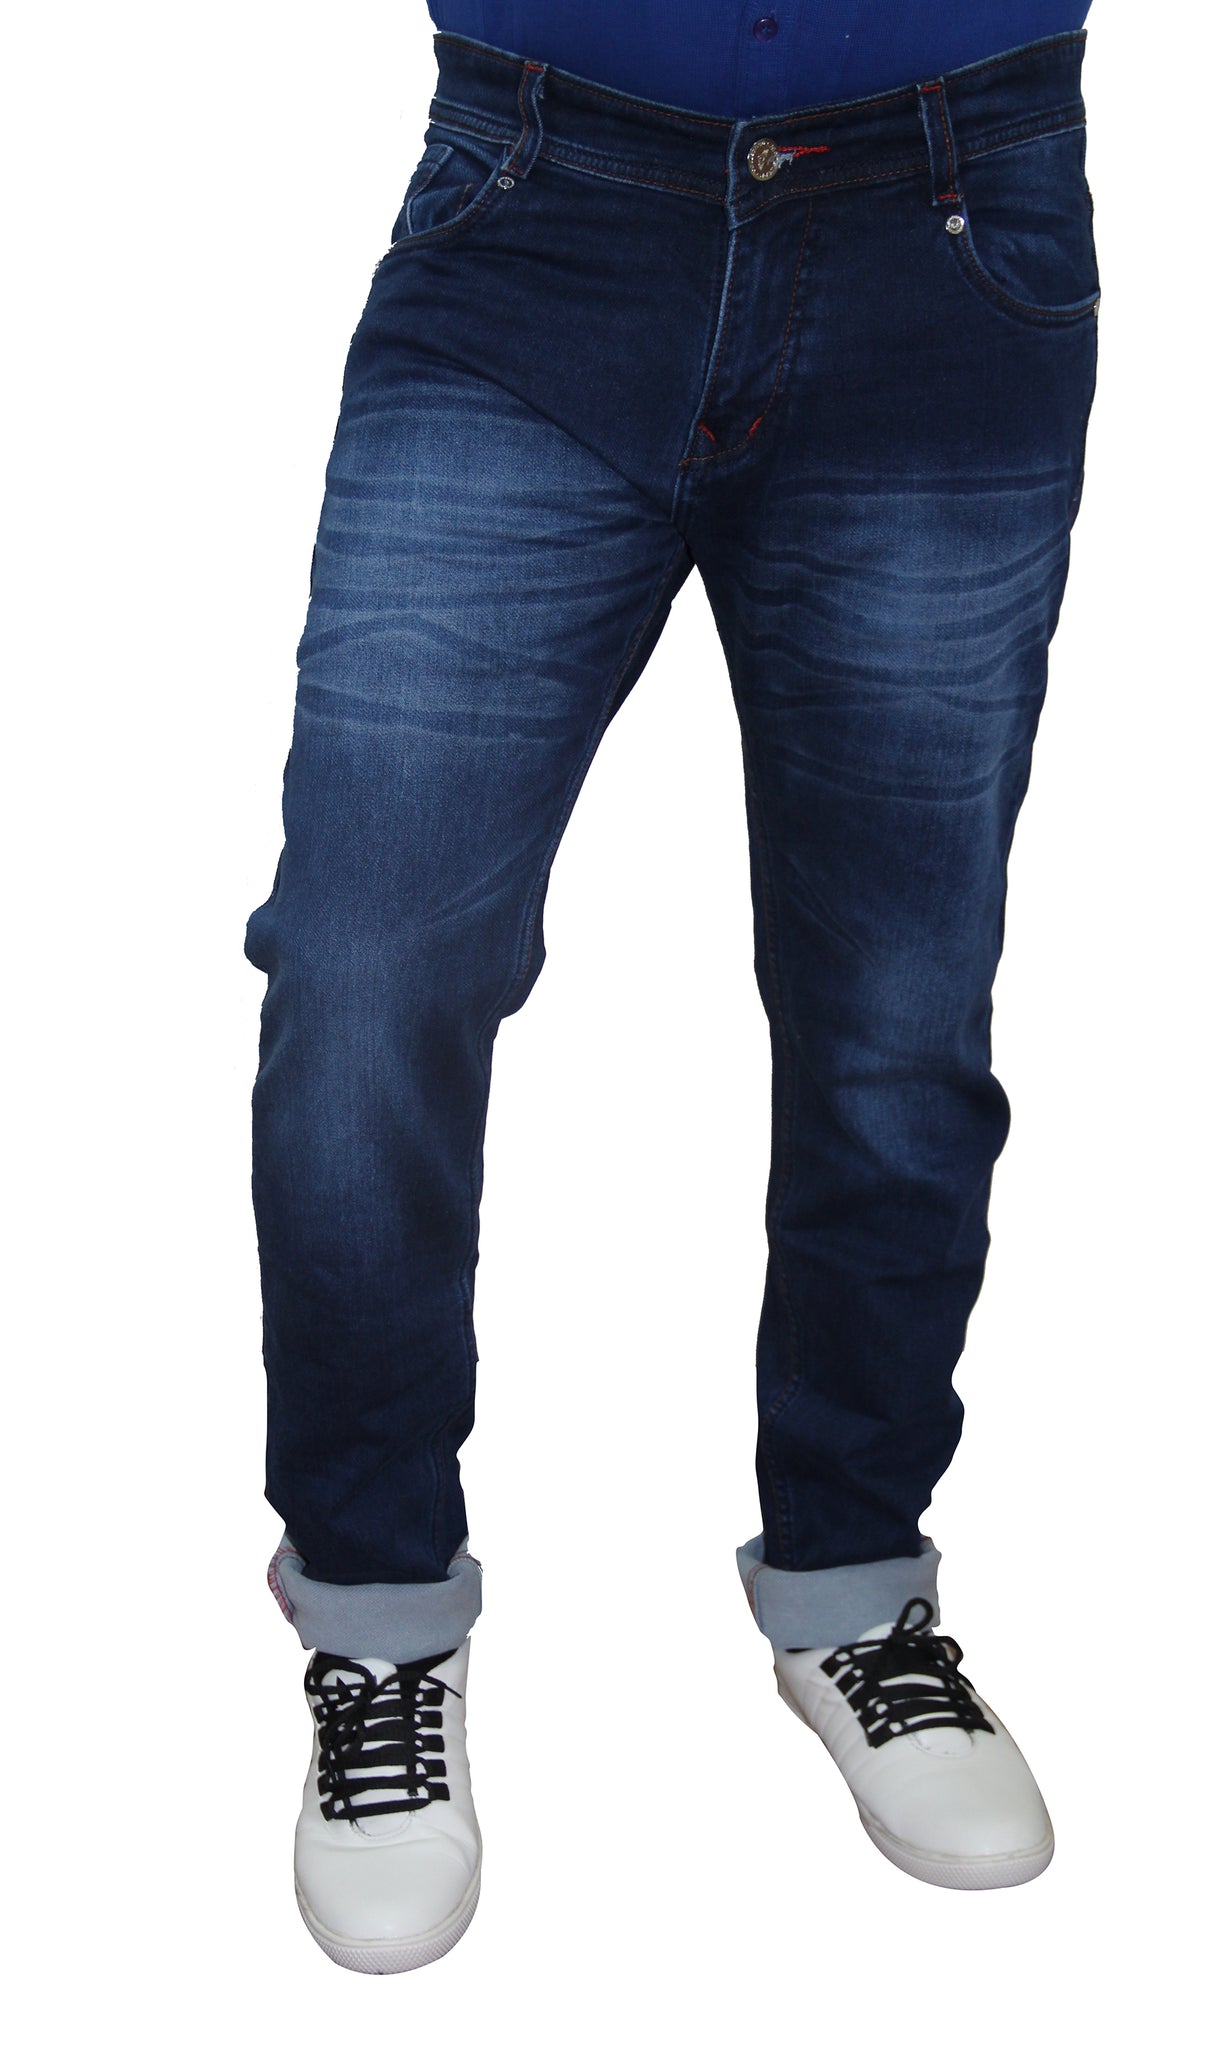 semi narrow jeans